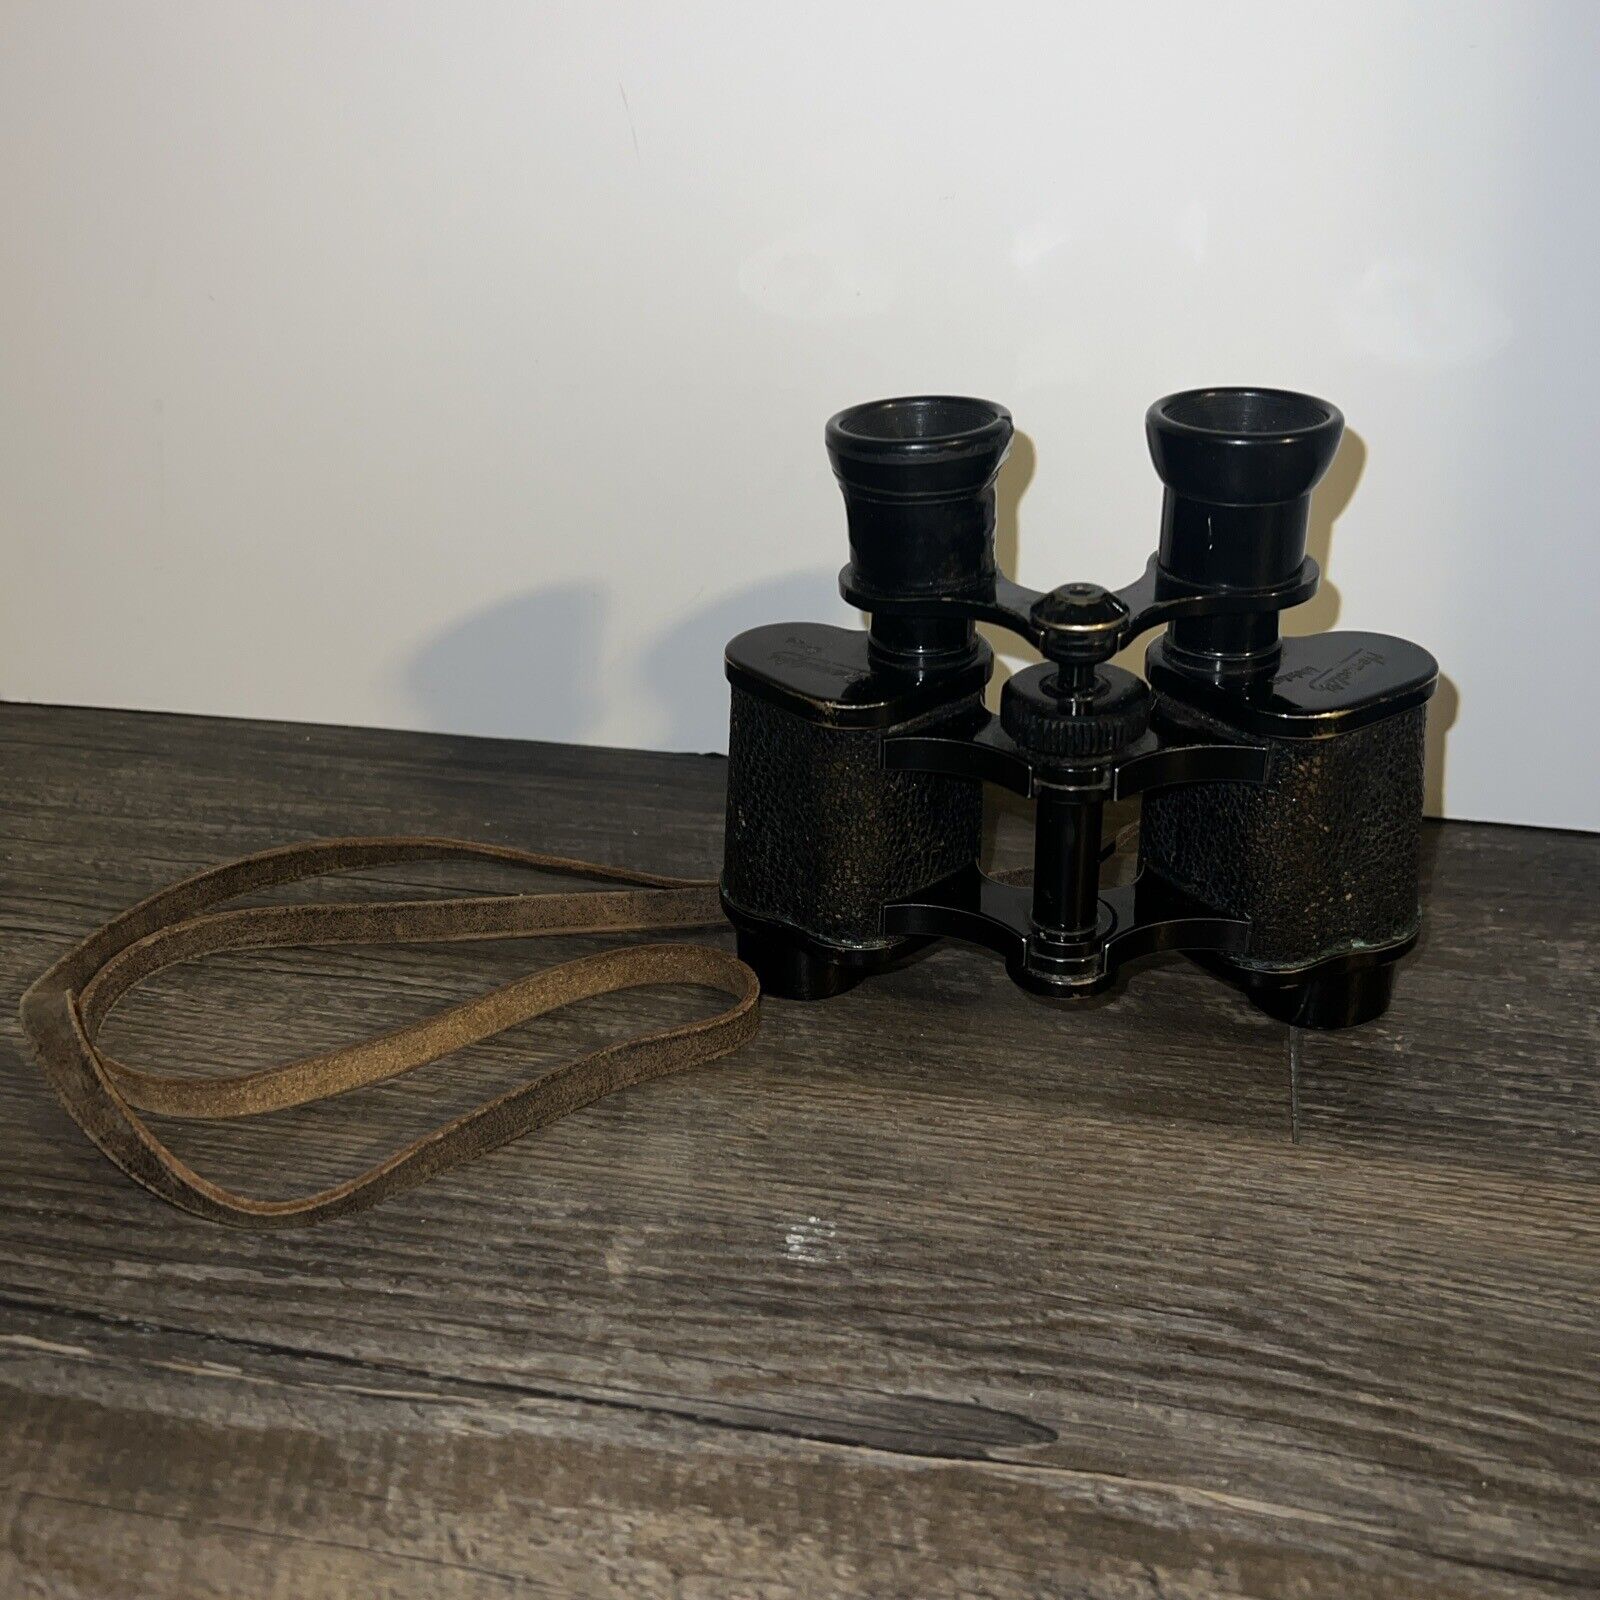 HENSOLDT WETZLAR 8 x 24 Spezialglas German WWII Binoculars with Strap